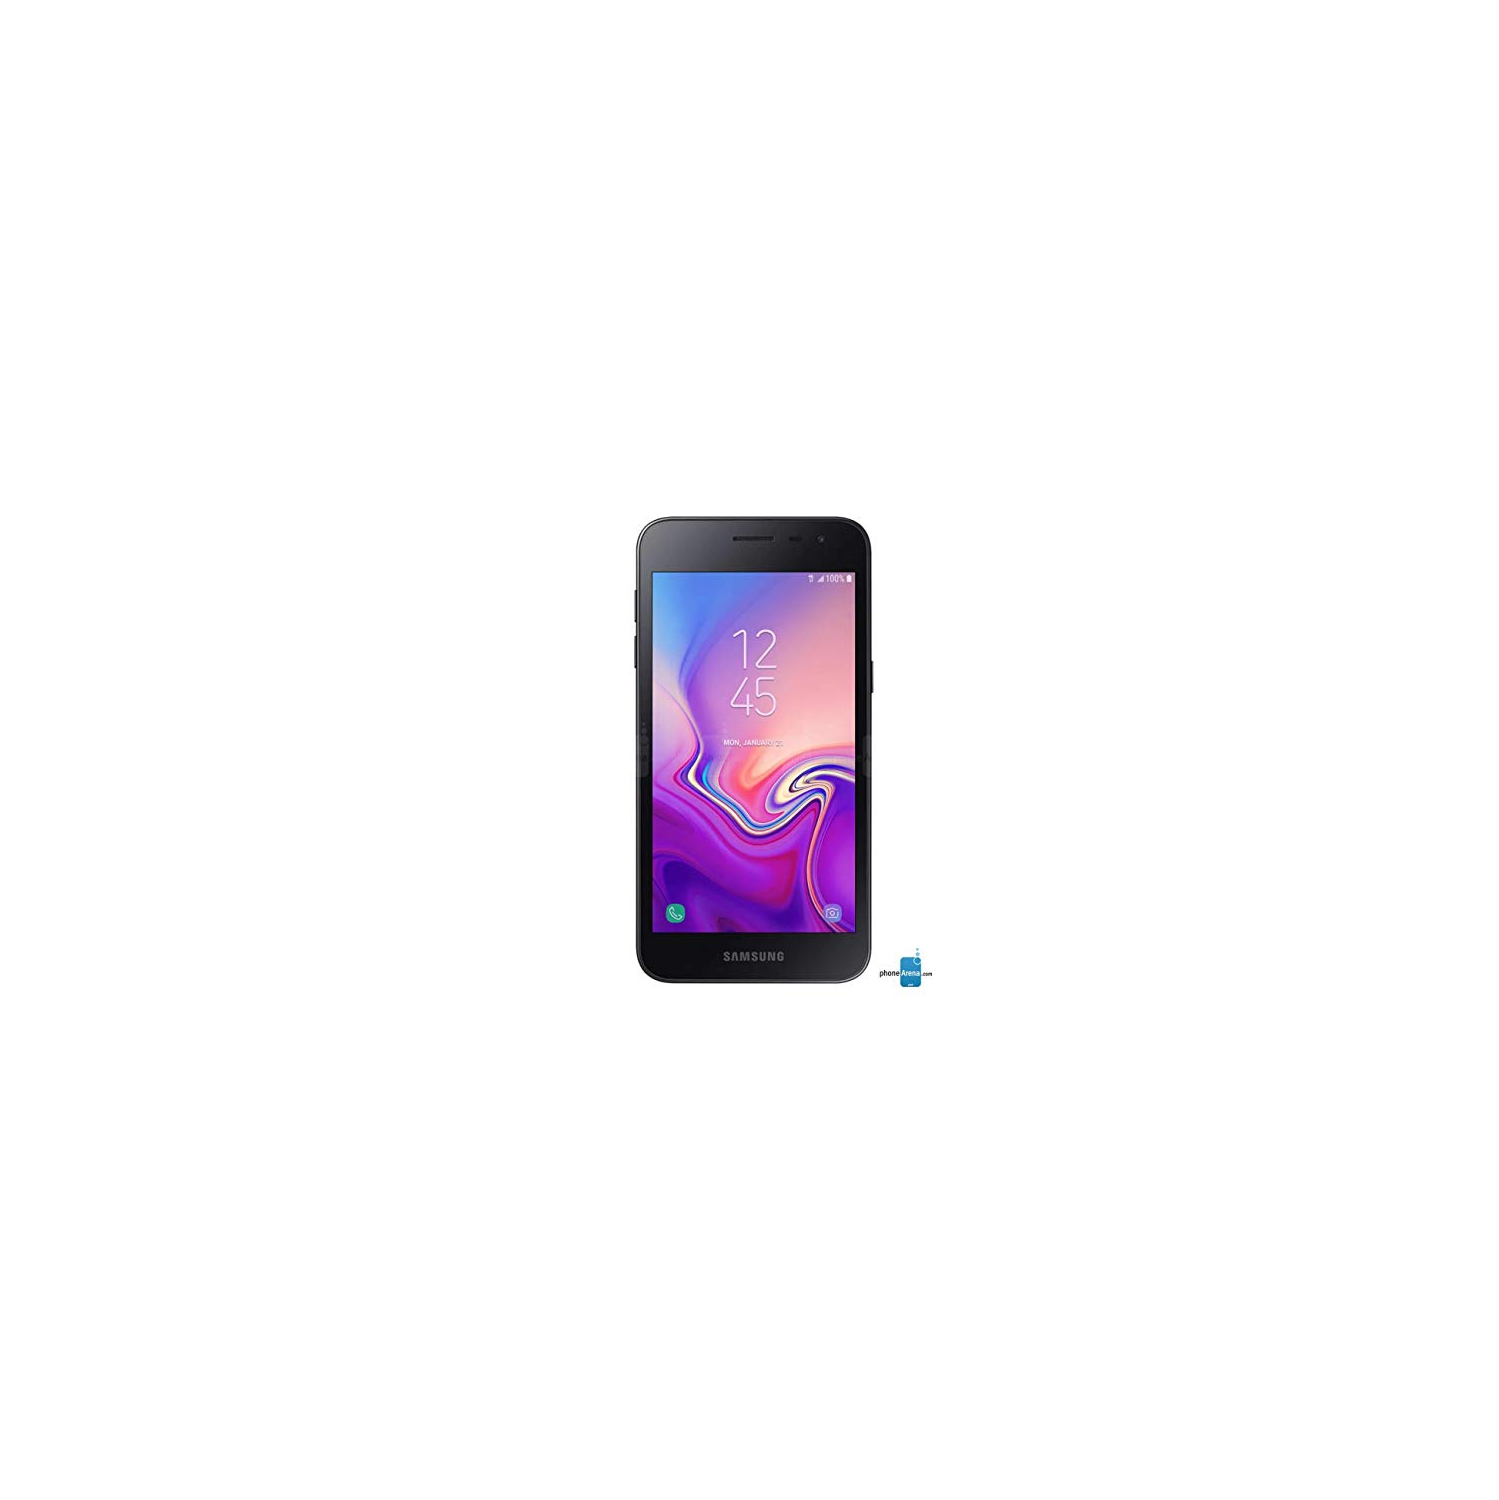 Samsung Galaxy J2 16 GB Black 5" Unlocked Phone 4G LTE